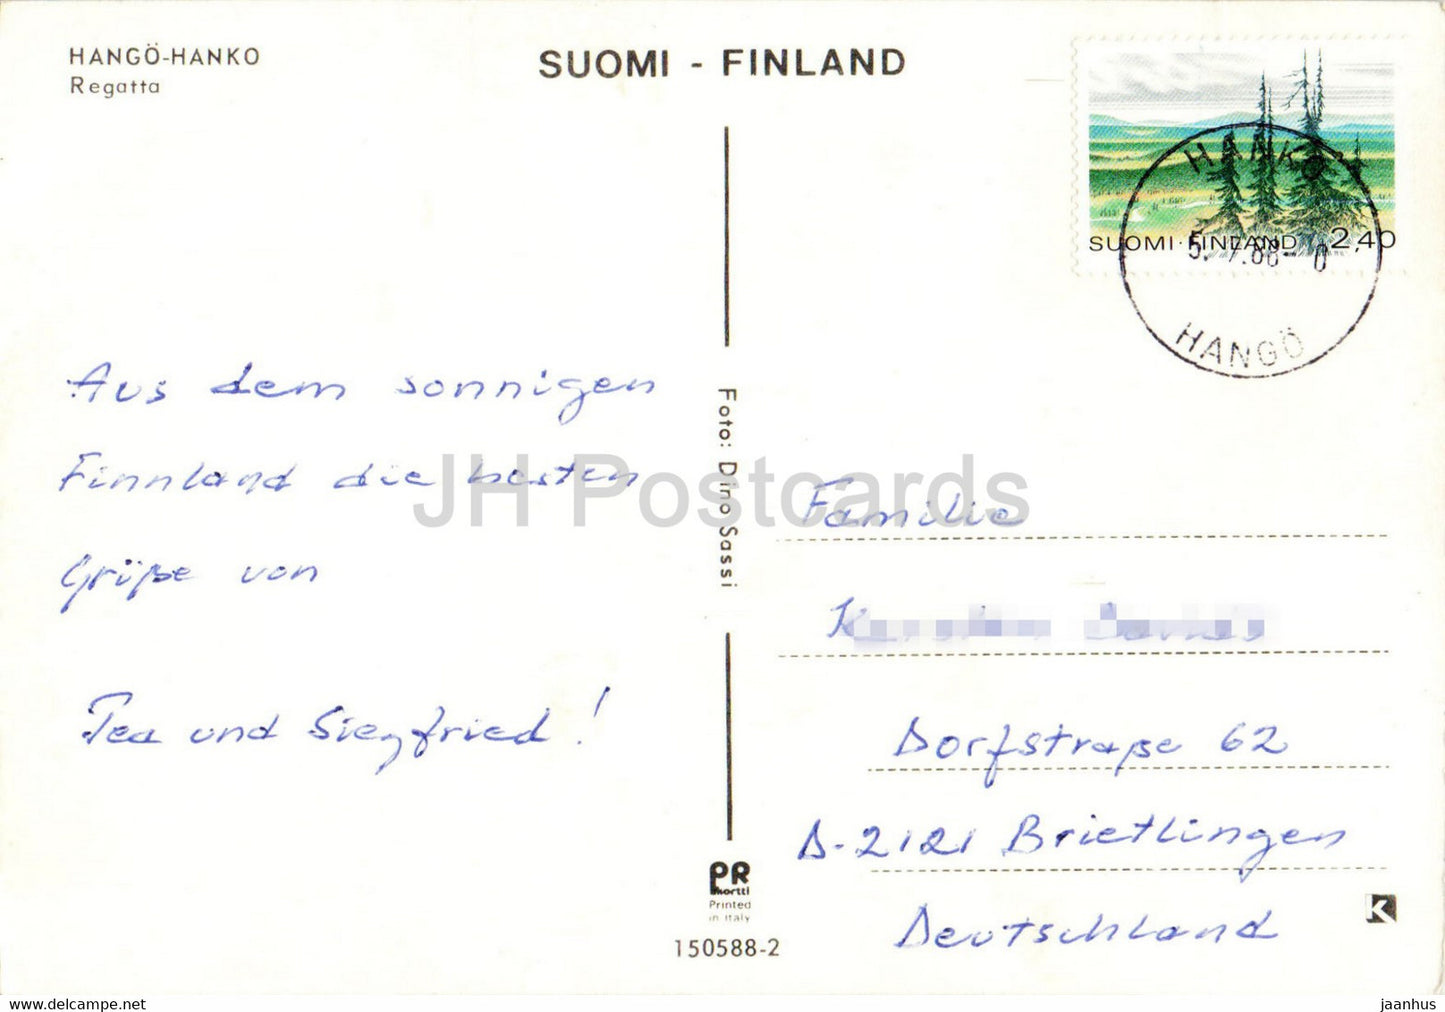 Hango - Hanko Regatta - bateau à voile - 1988 - Finlande - d'occasion